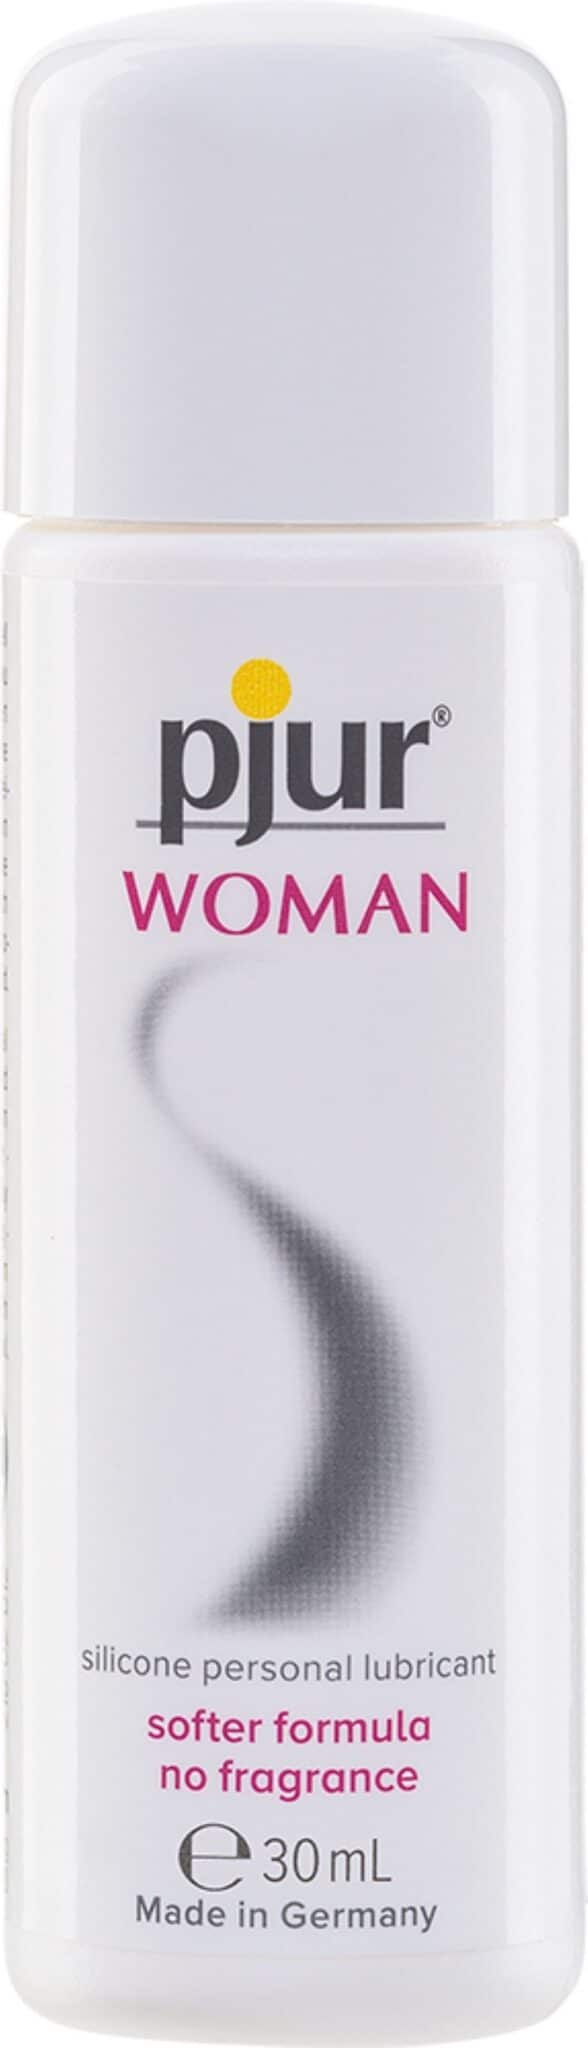 Product Pjur Woman